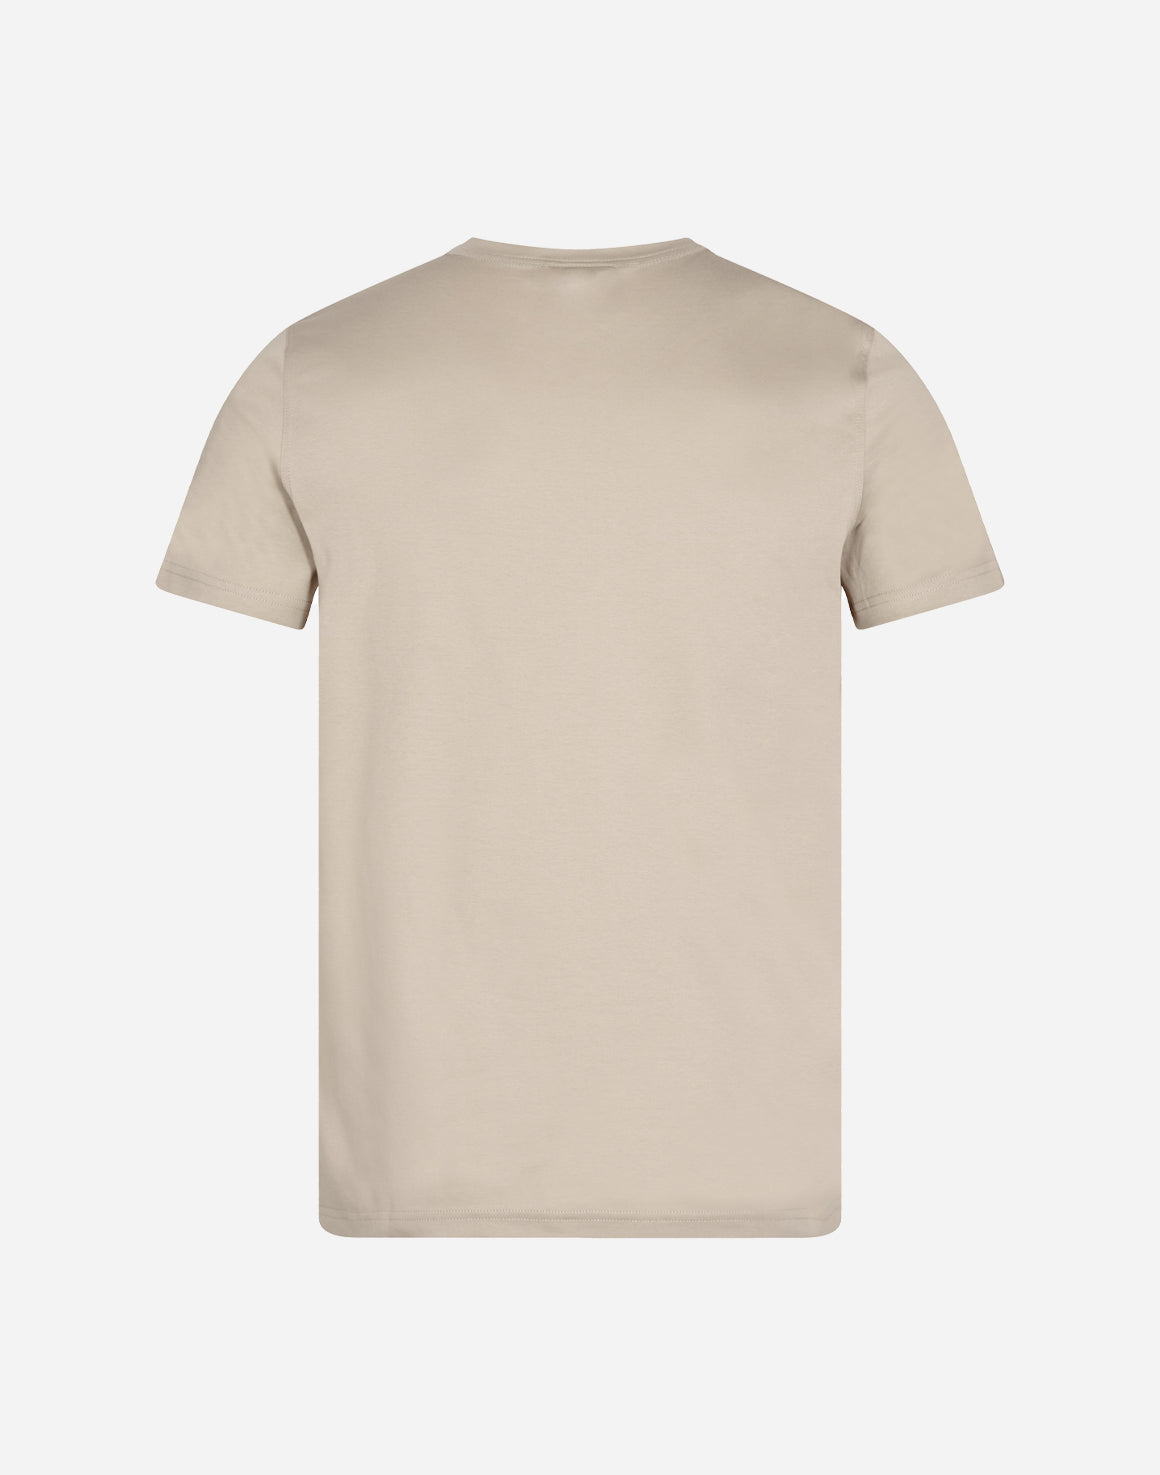 Perry Crunch O Neck T-shirt - Lys Sand - Mos Mosh Gallery - Kul og Koks